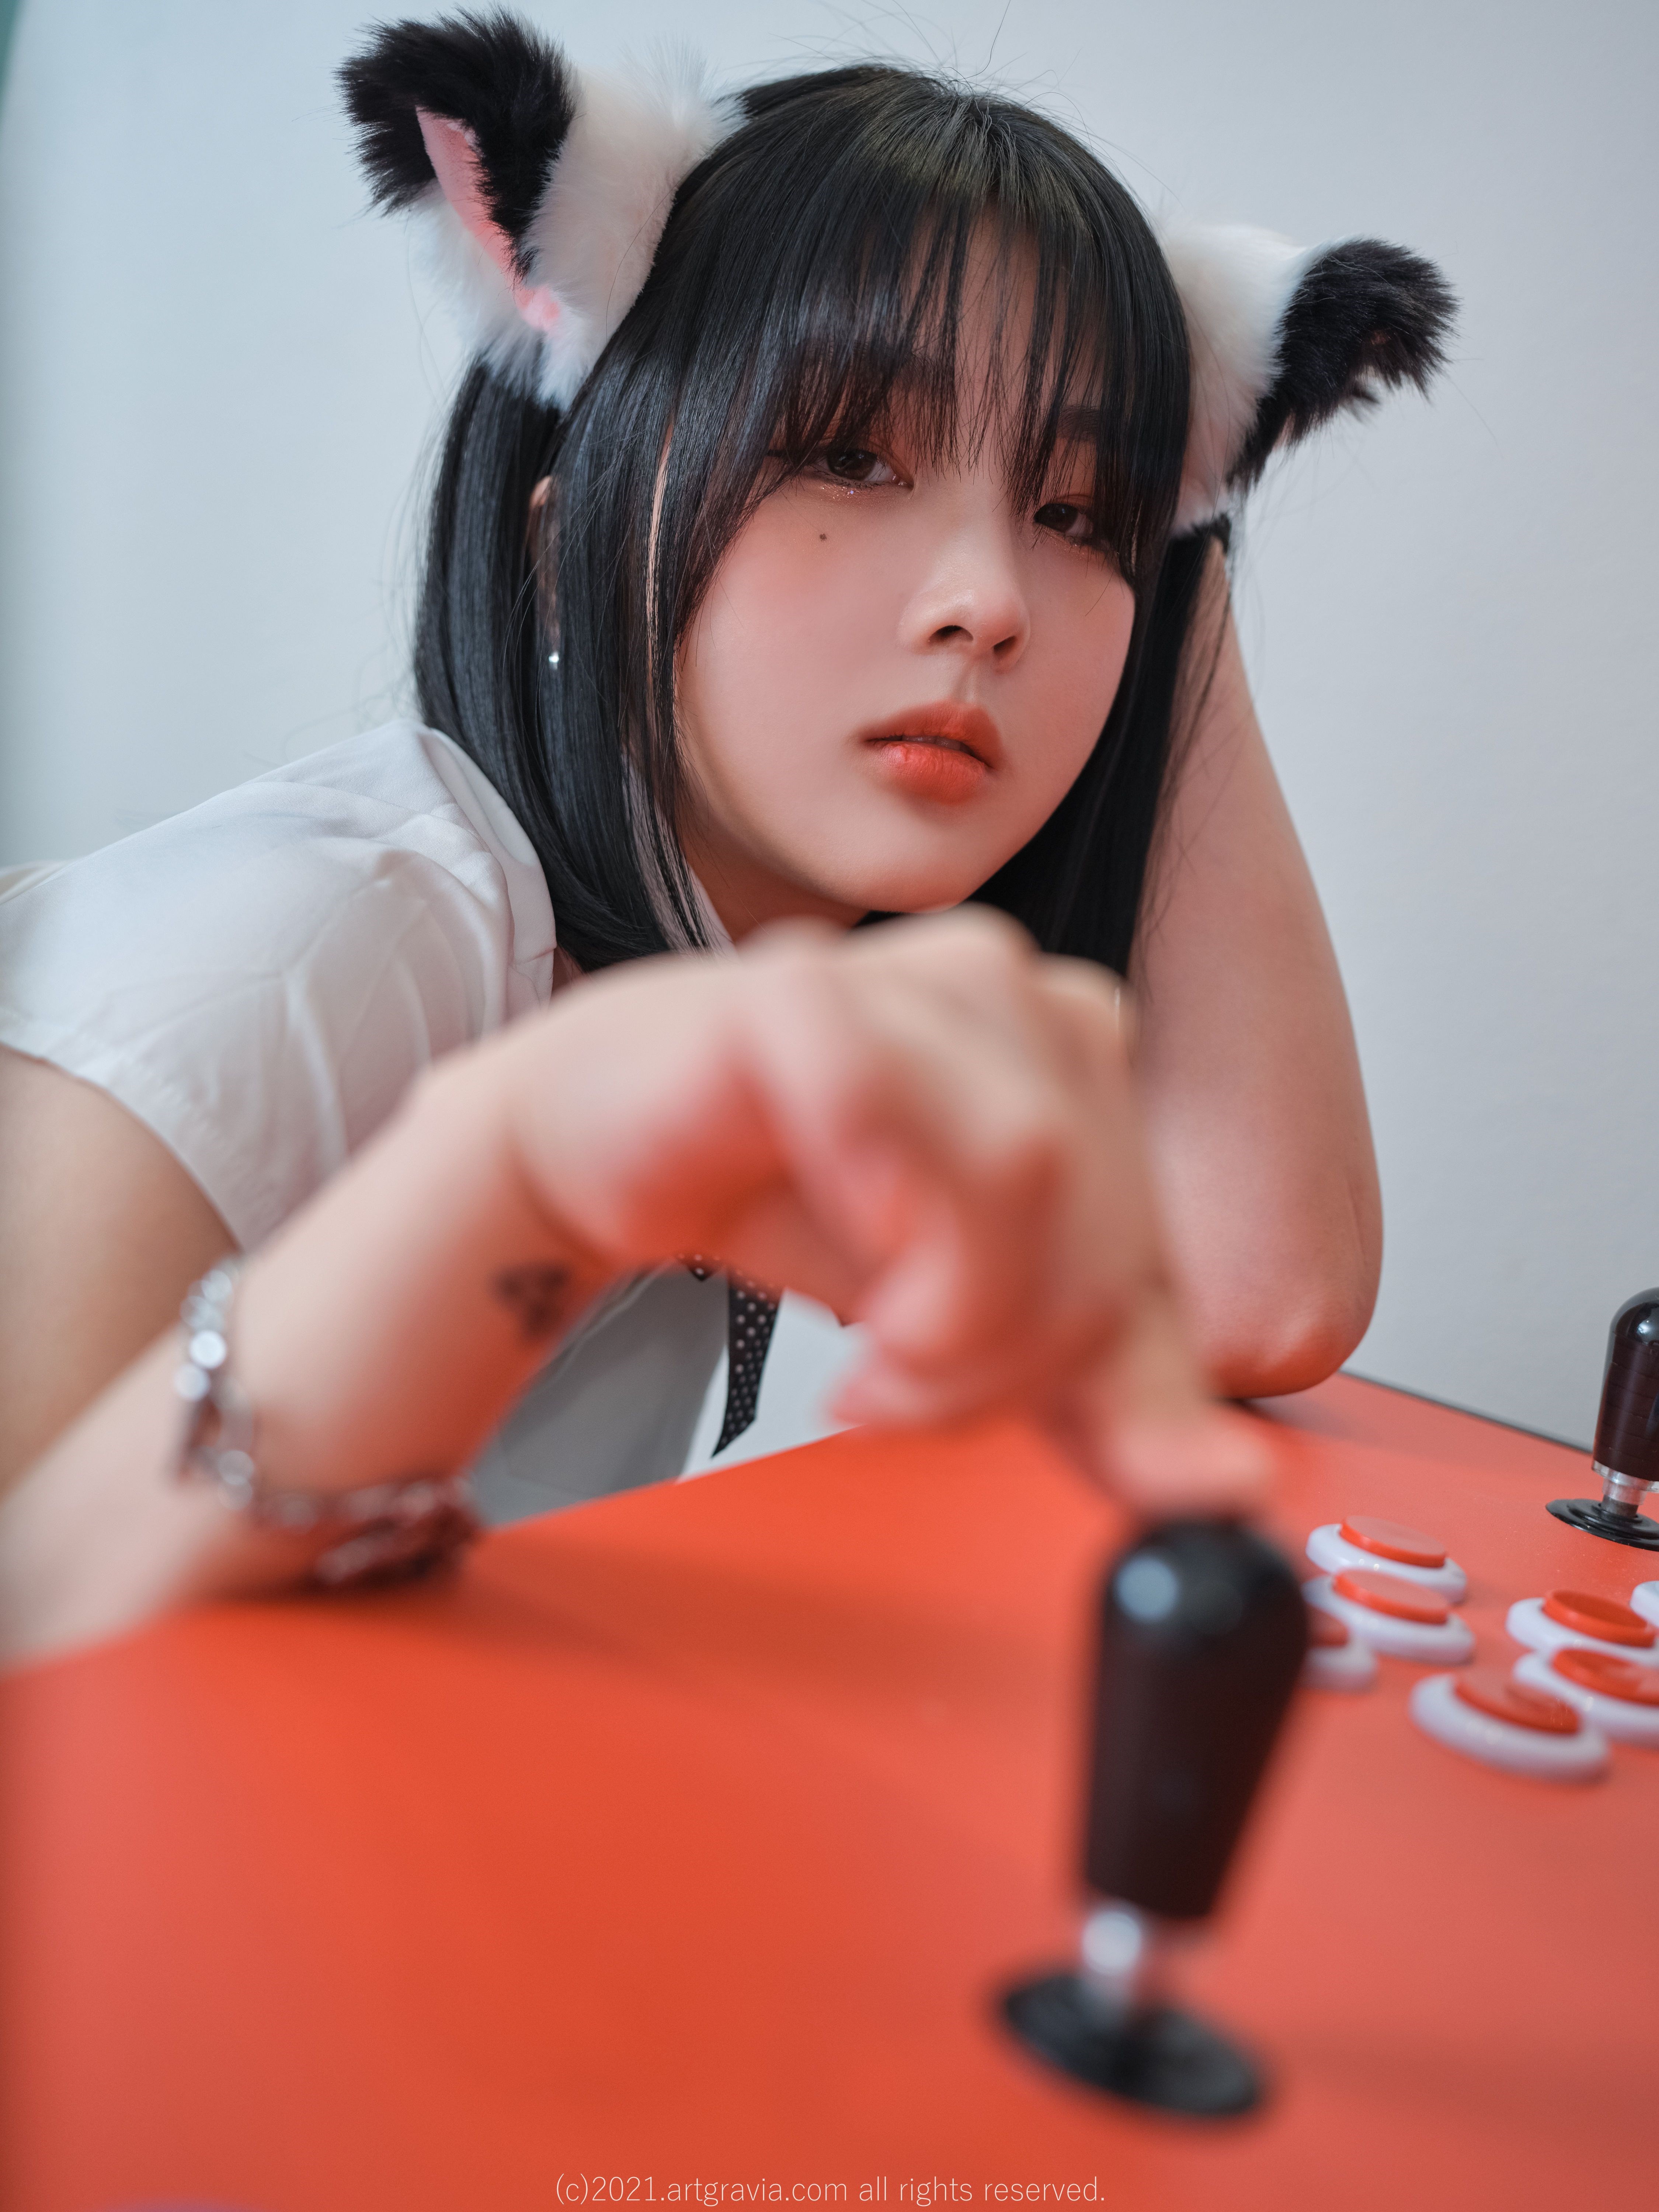 Asian Women Brunette Arcade Cabinet Korean Women Animal Ears 4500x6000